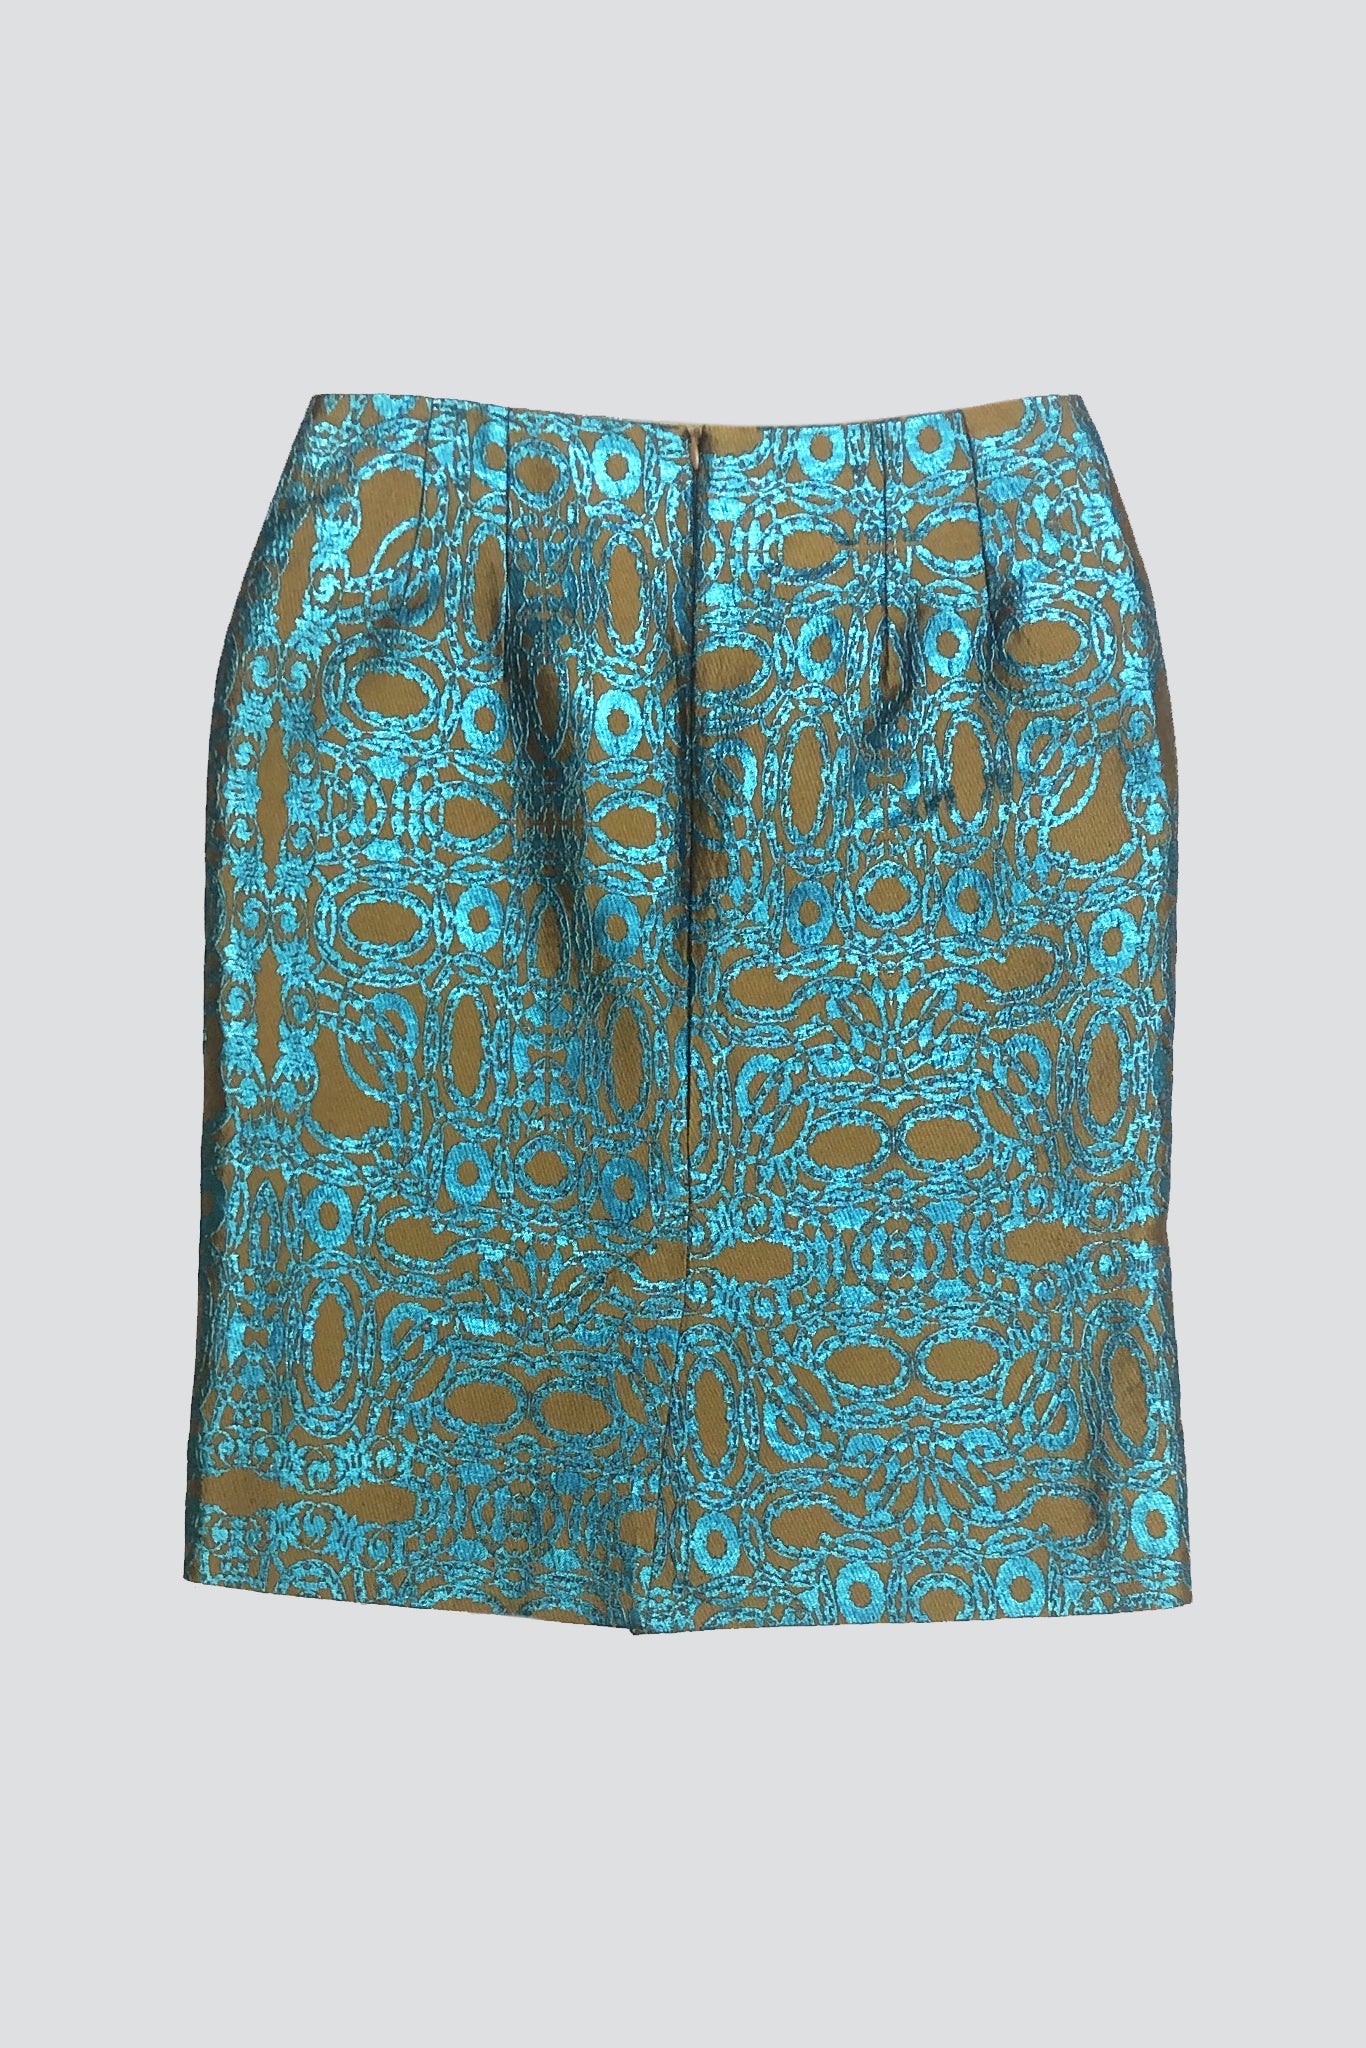 Dries Van Noten Tapestry Skirt